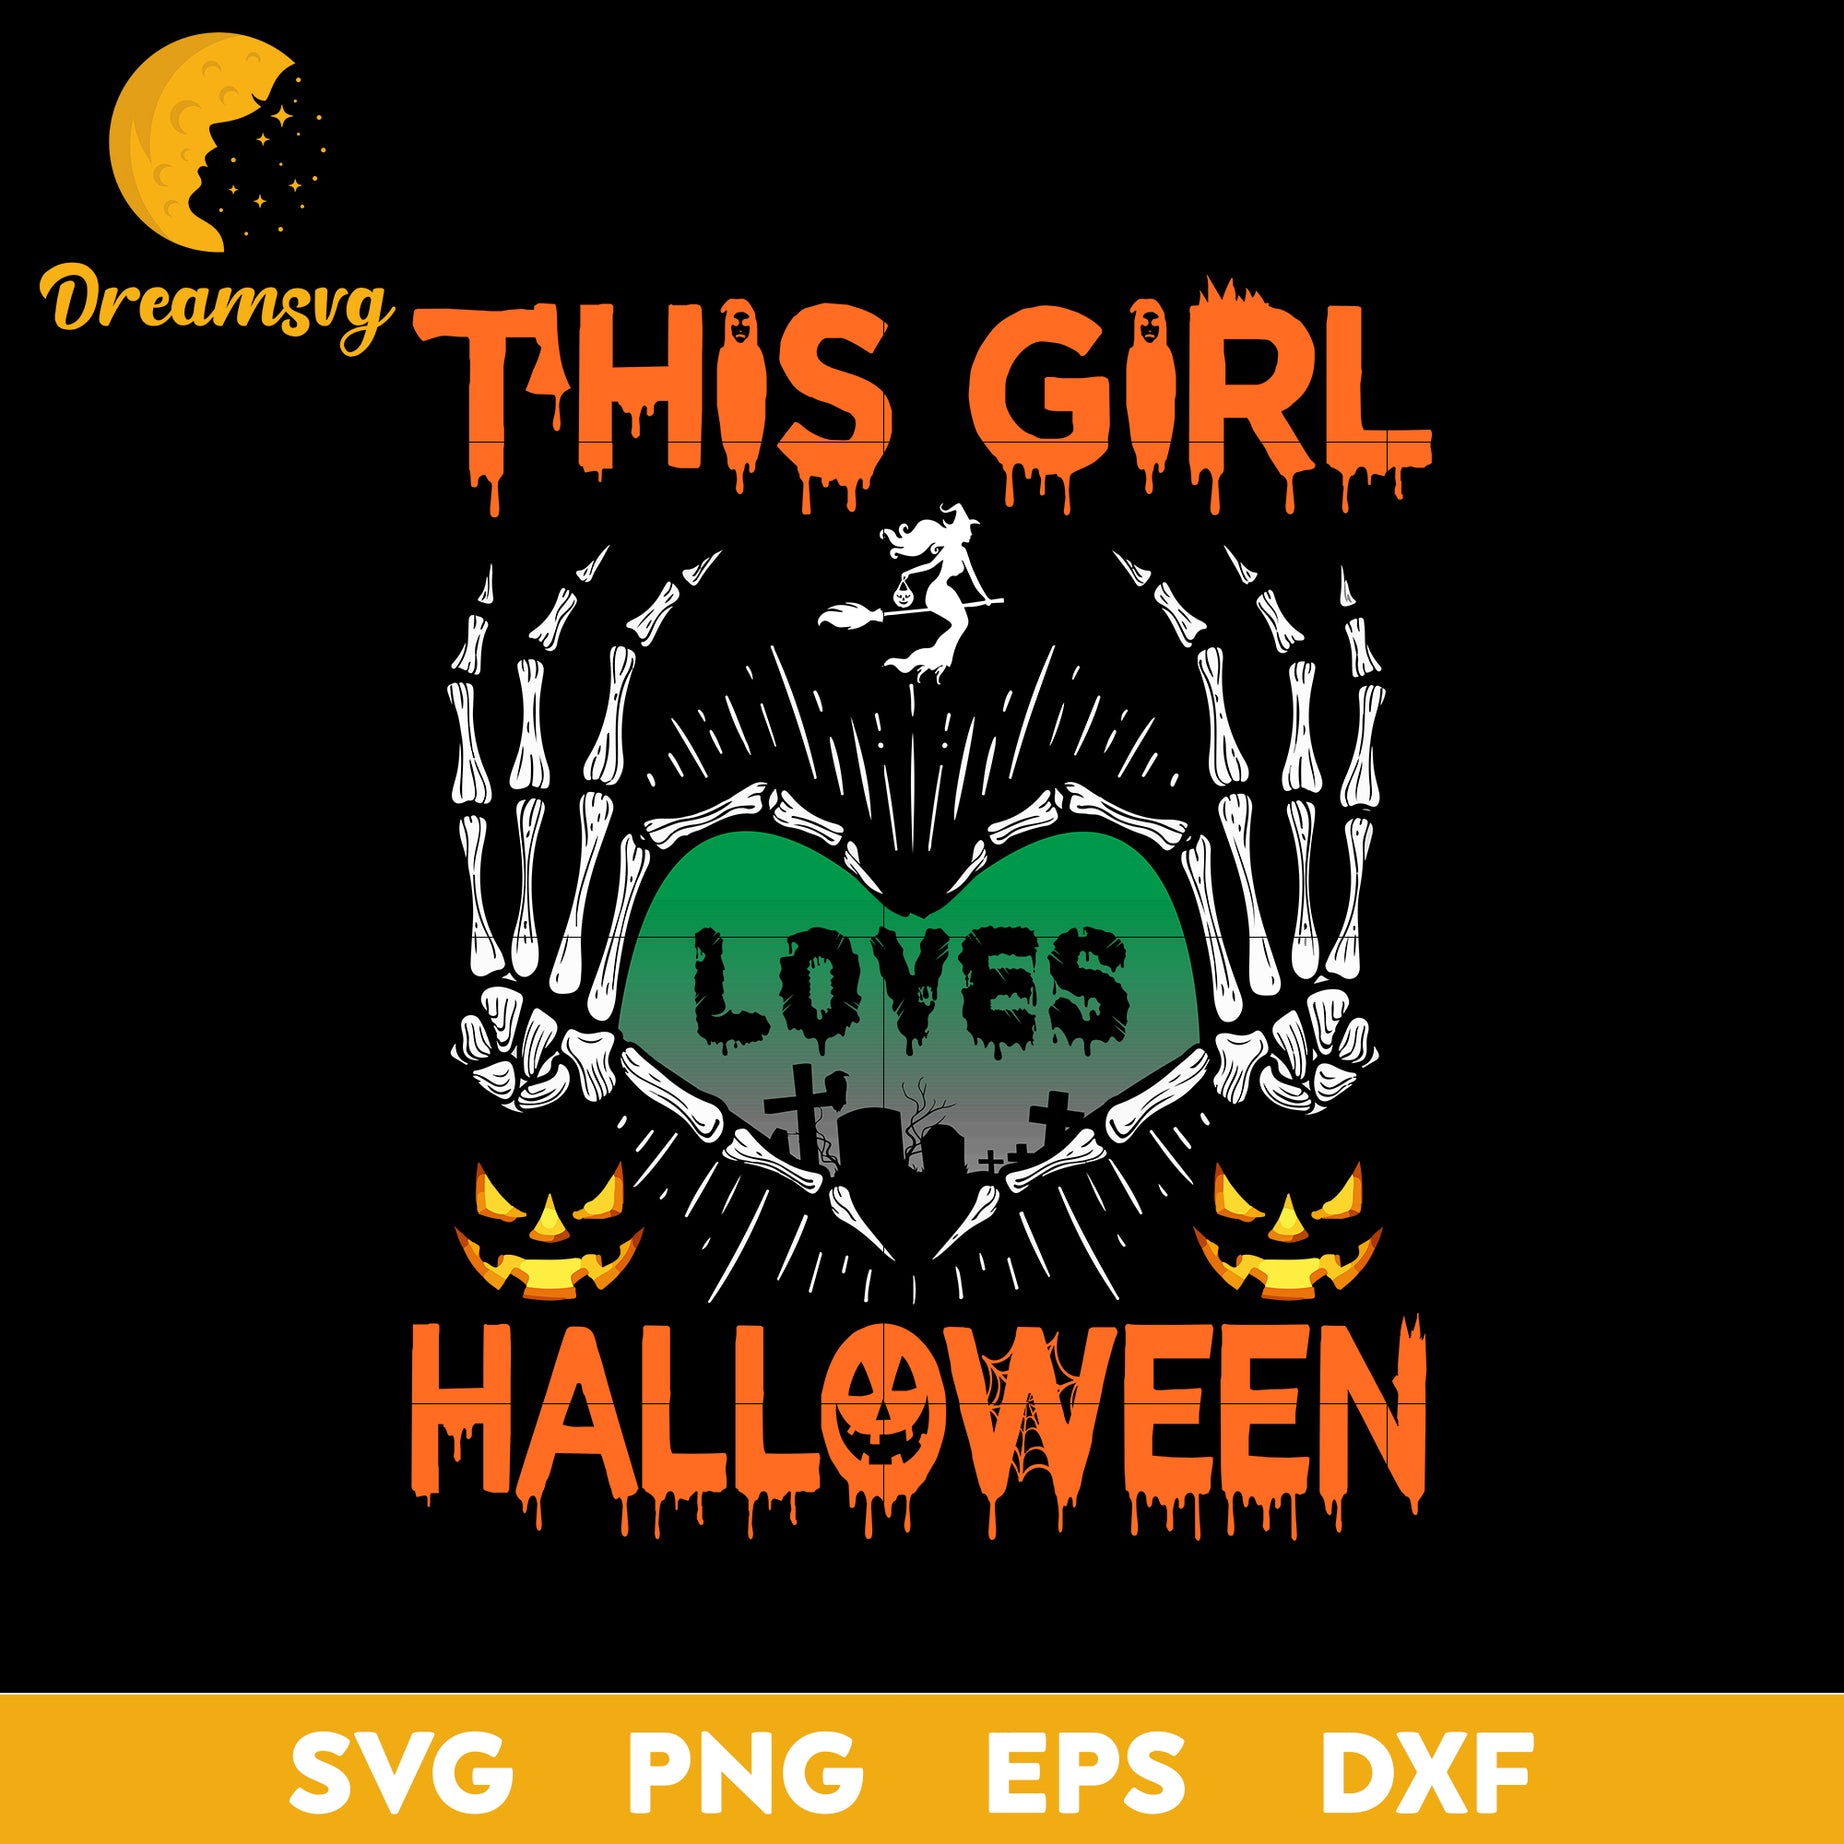 This girl loves halloween svg, Halloween svg, png, dxf, eps digital file.